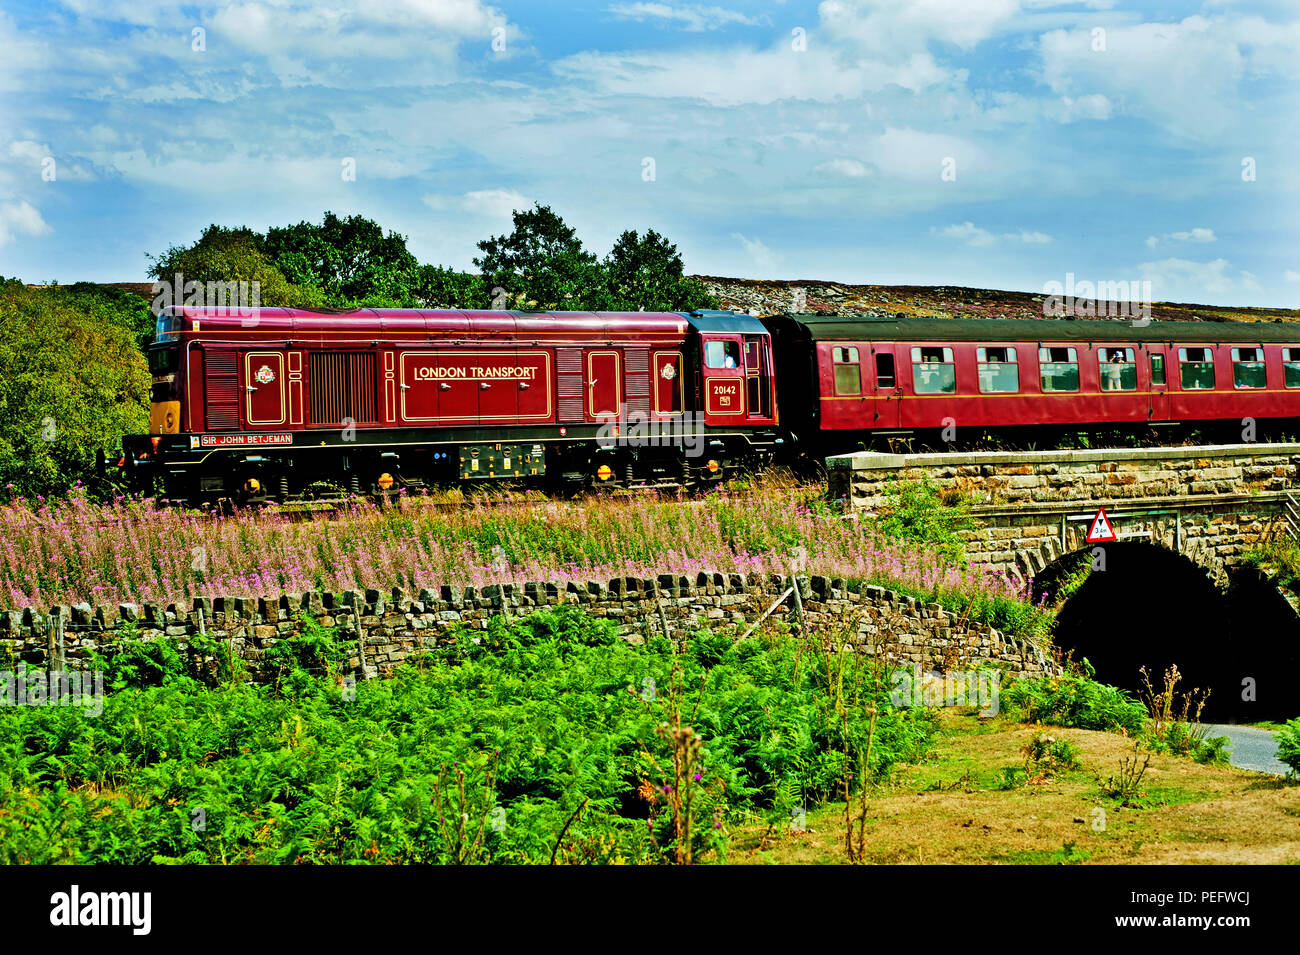 London Transport Liveid Class 20142 at Moorgates, North Yorkshire Moors Railway, England Stock Photo